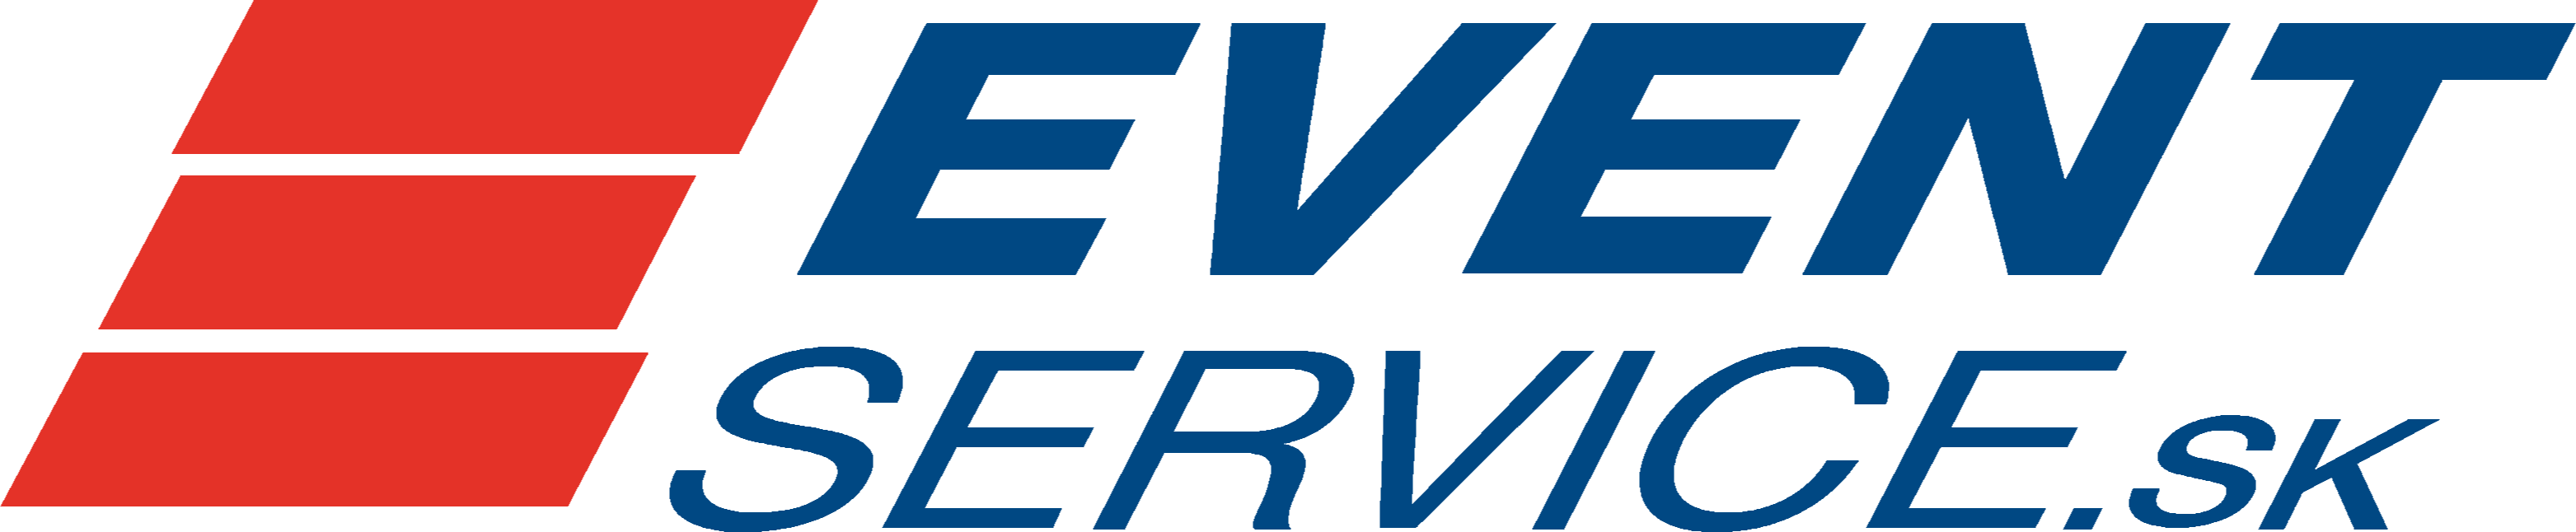 eventservice logo c